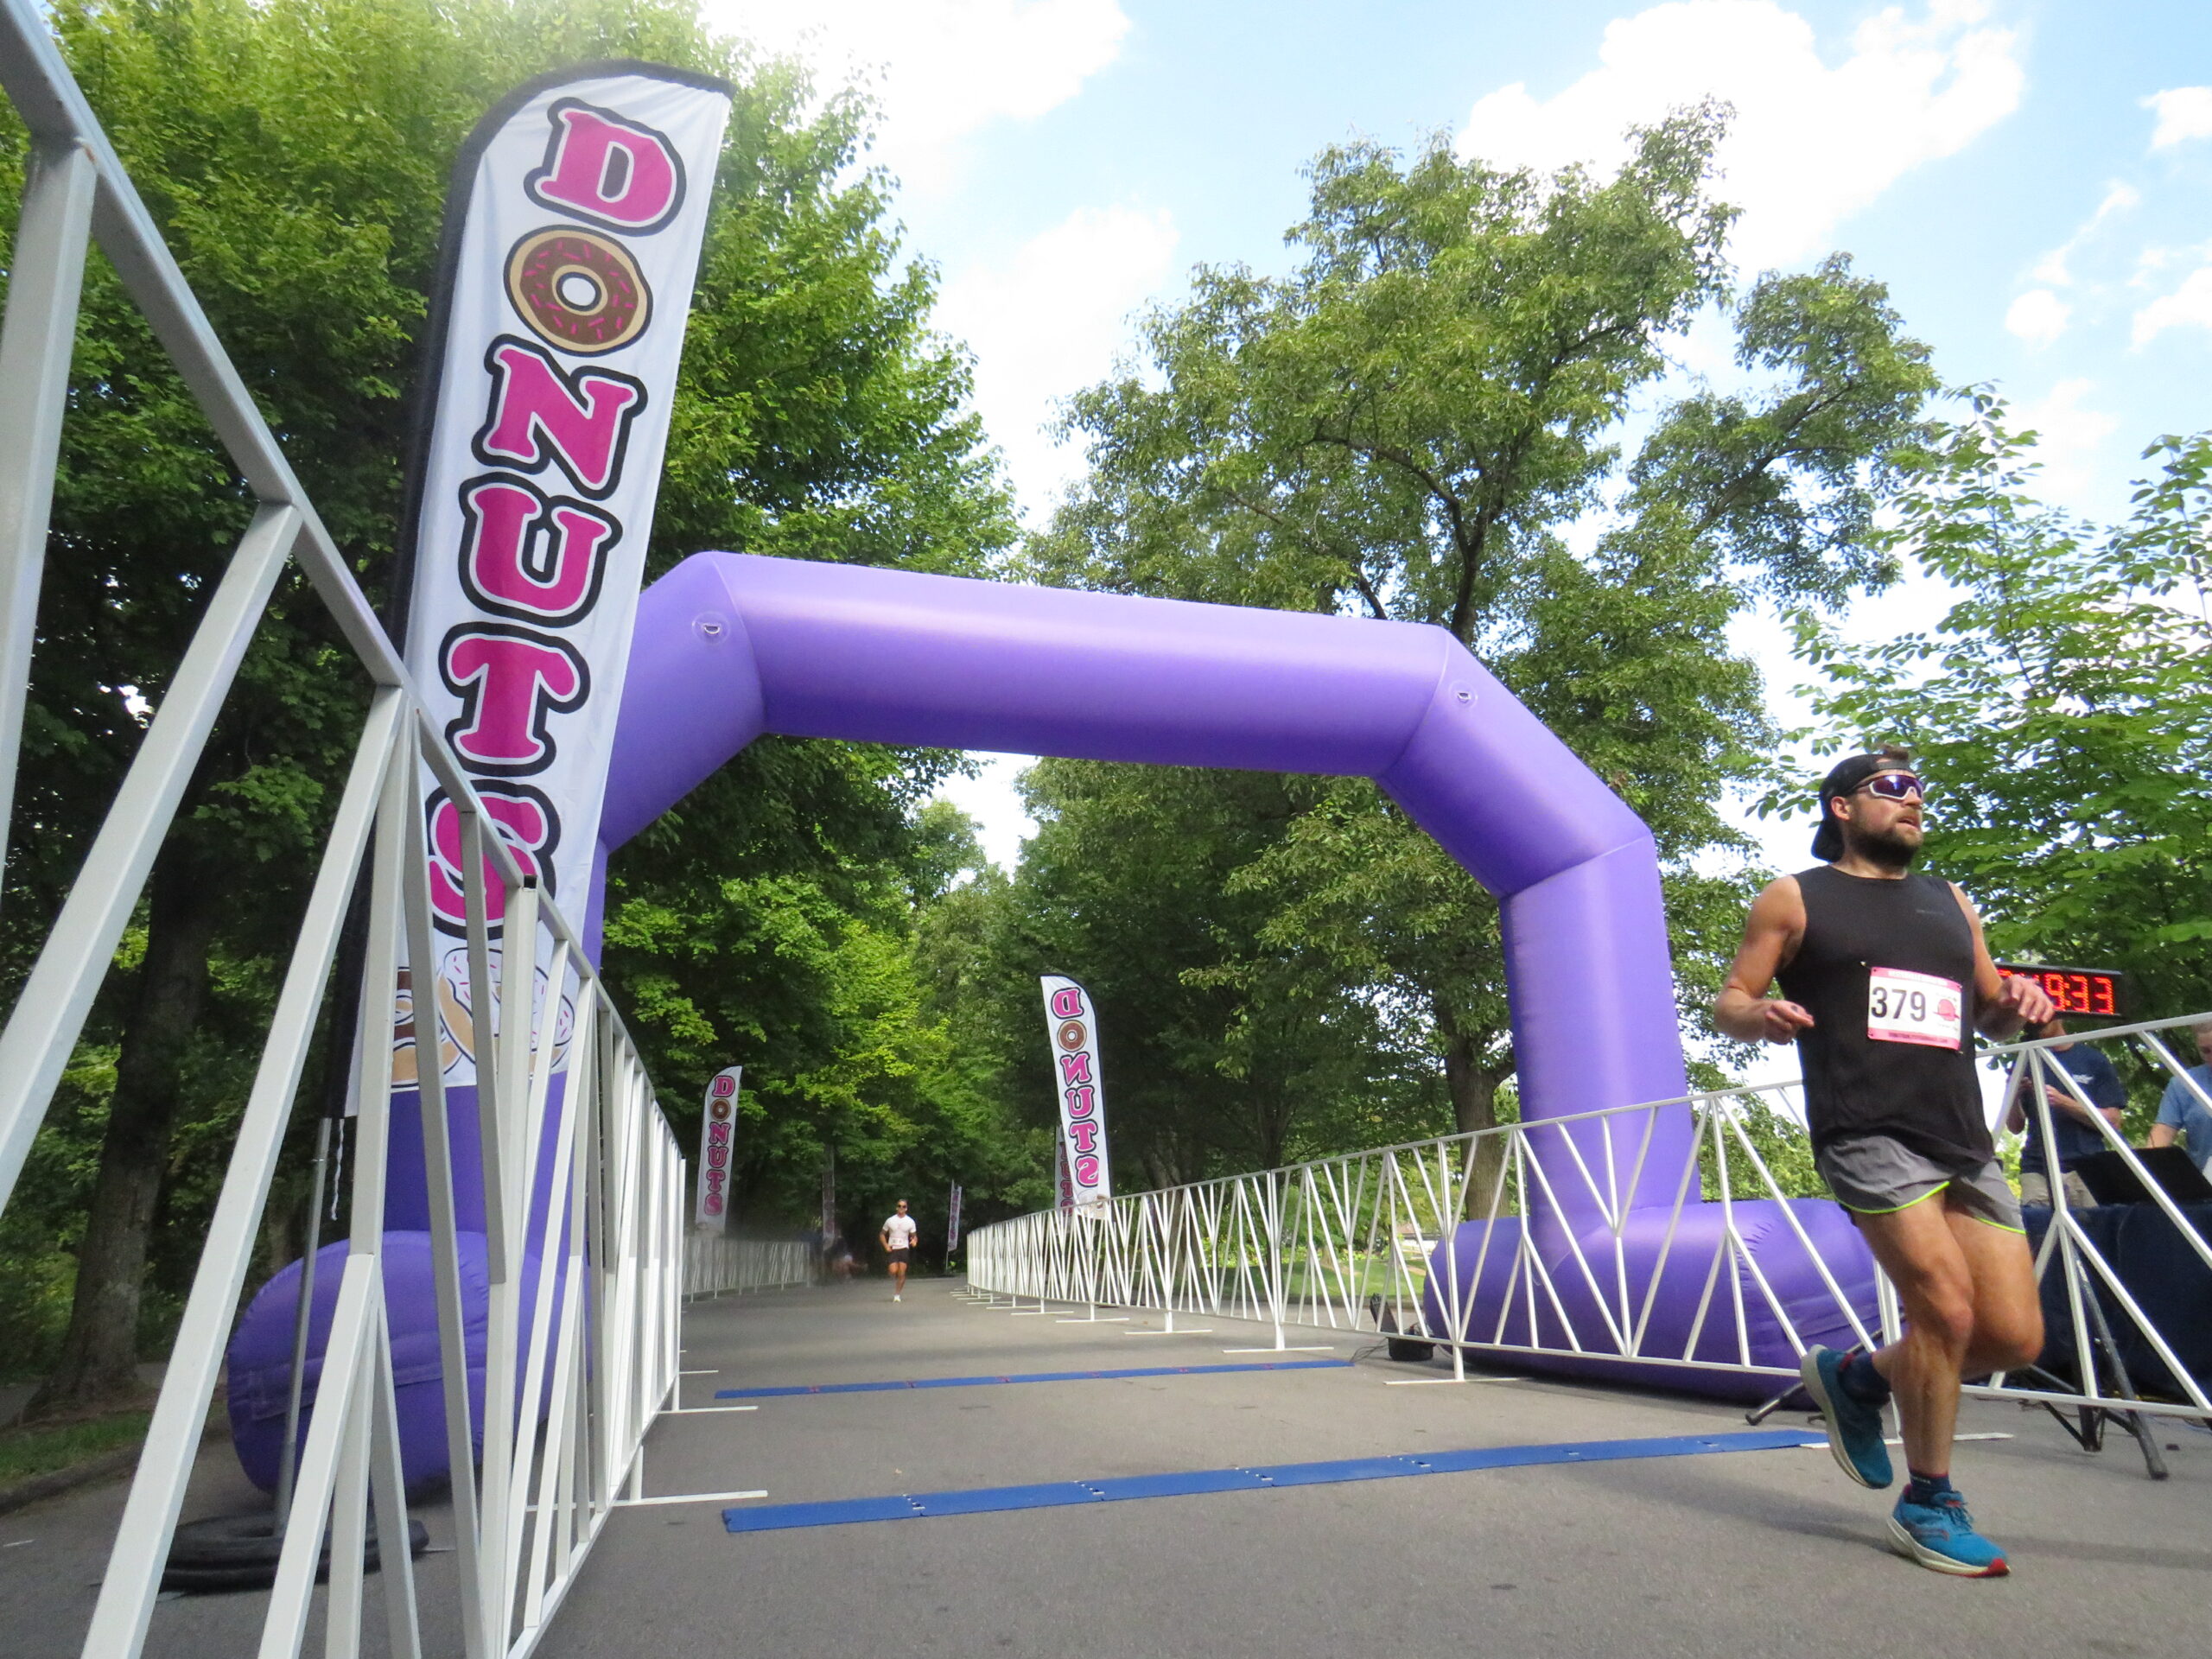 Race Finisher 5k 10k Ohio - Westerville Donut Run - Columbus Donut Run - Kids Donut Dash - USA Race Timing & Event Management - Race Chip Timing